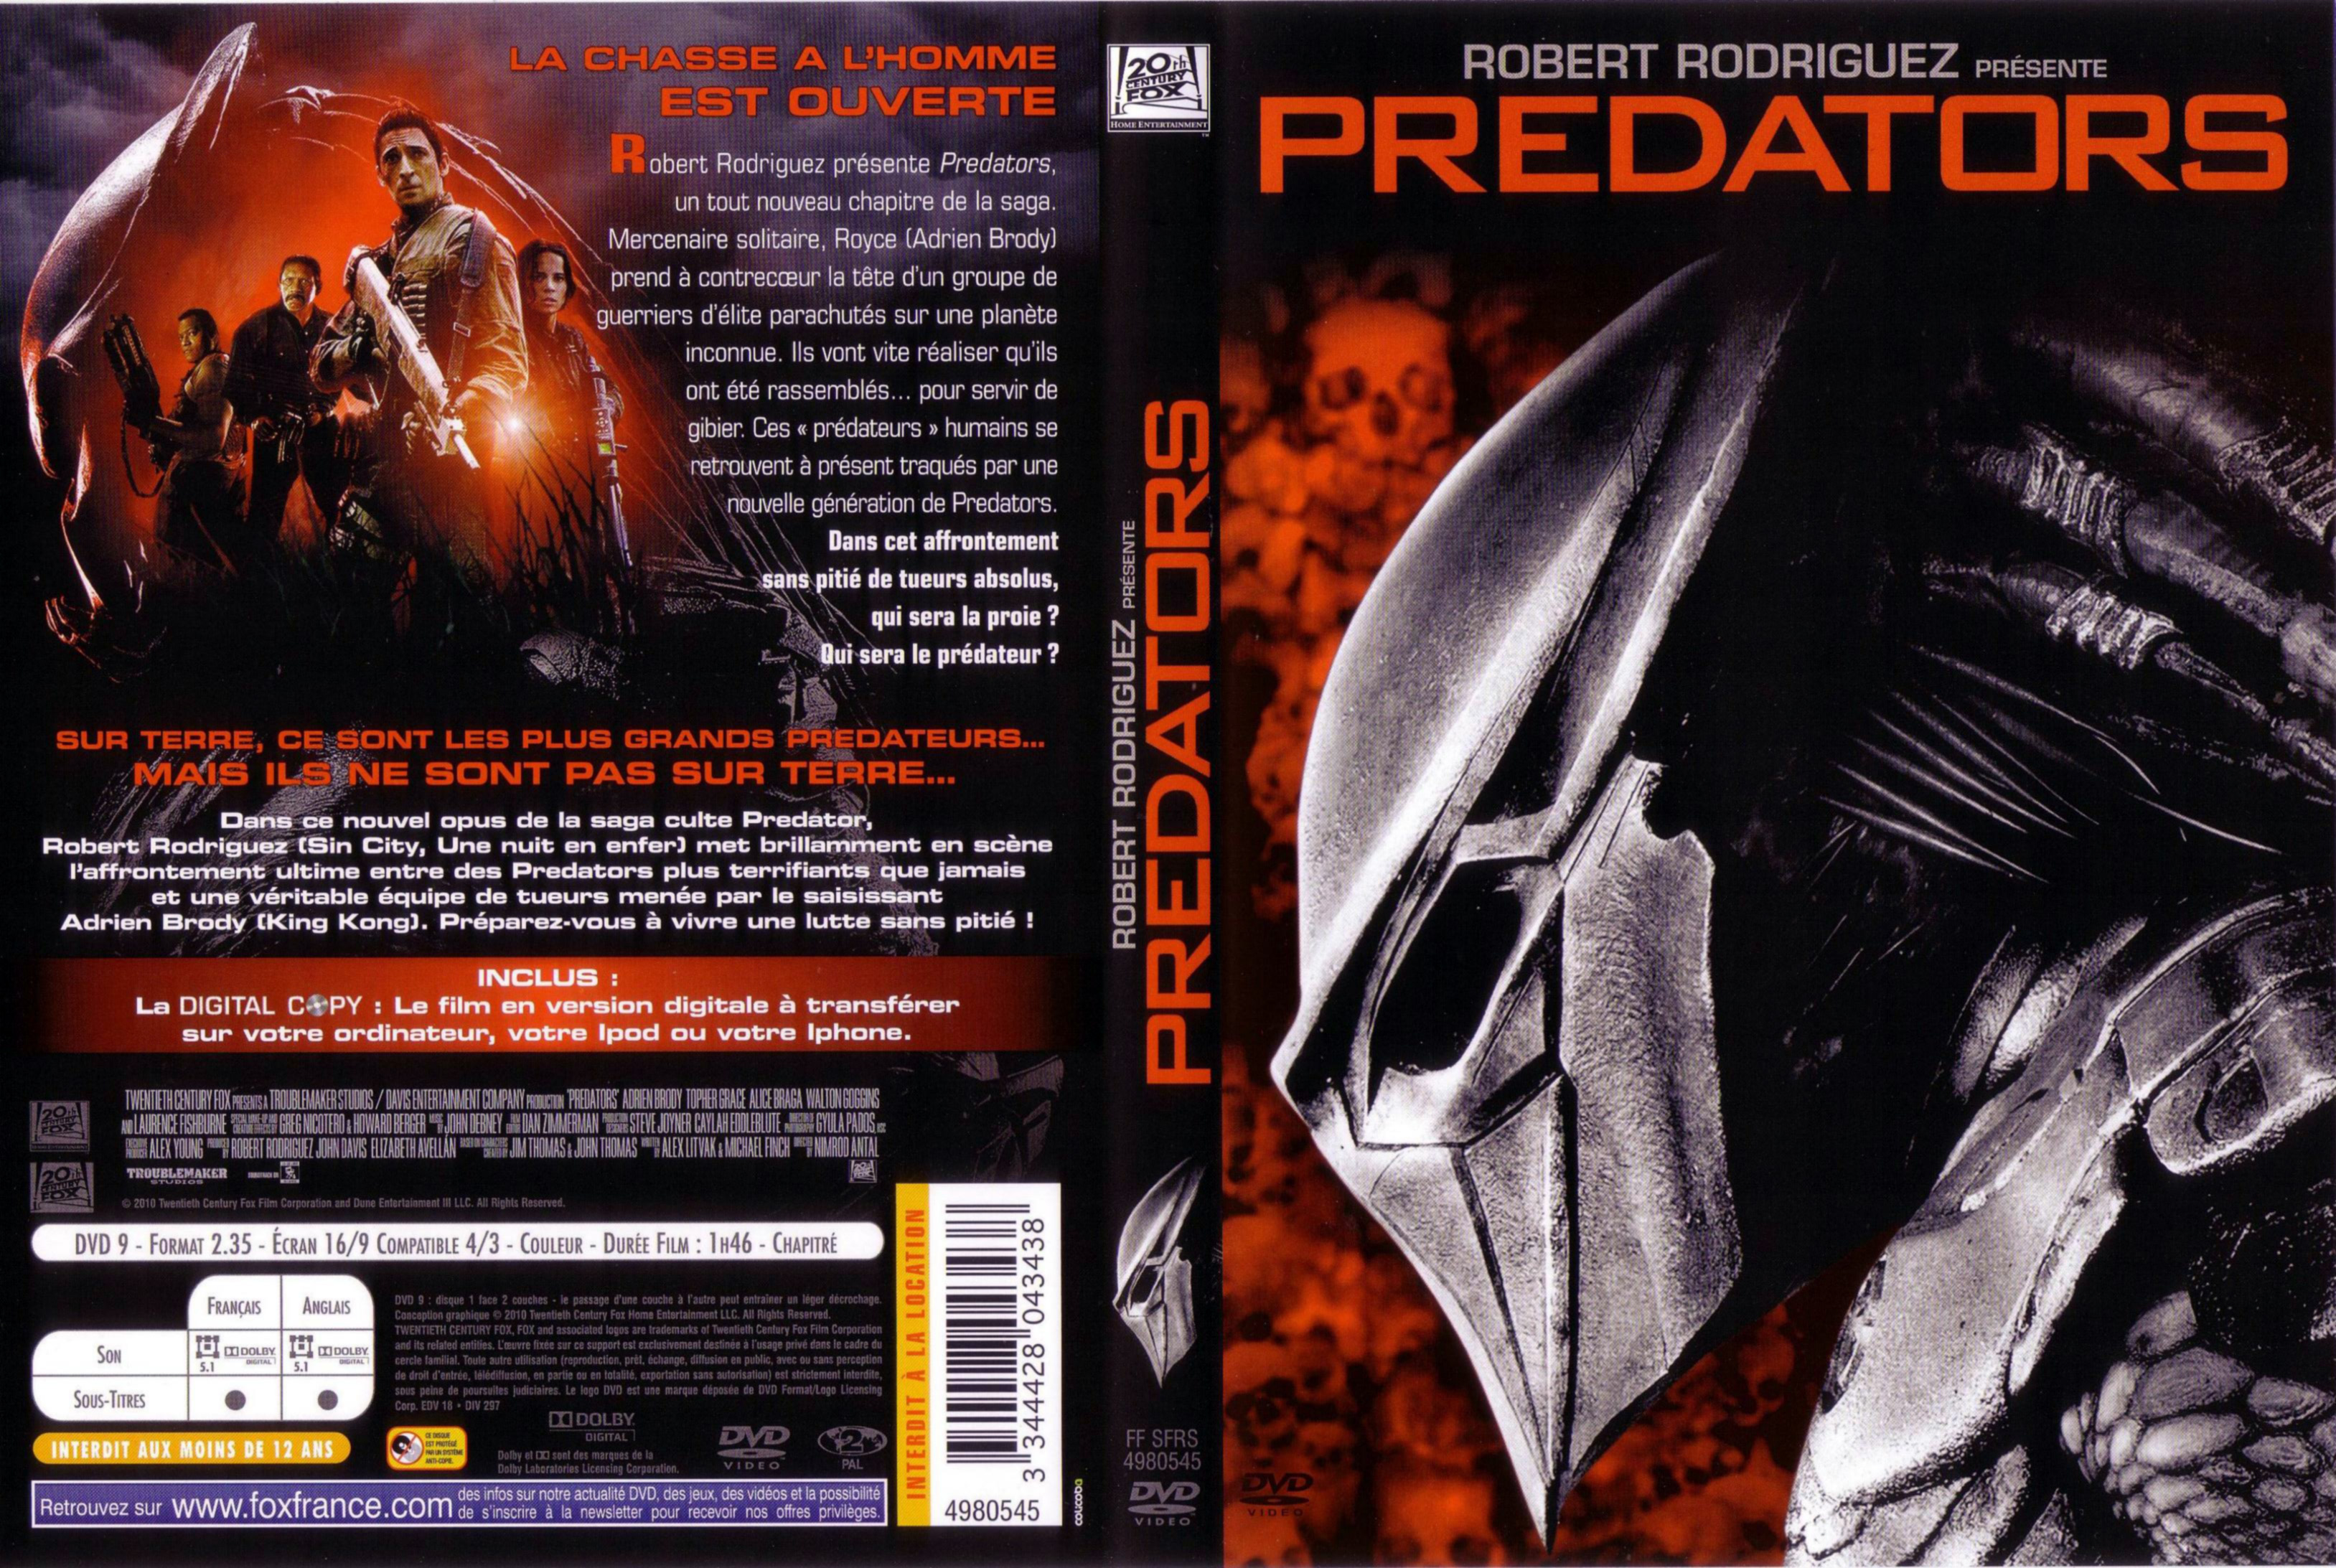 Jaquette DVD Predators